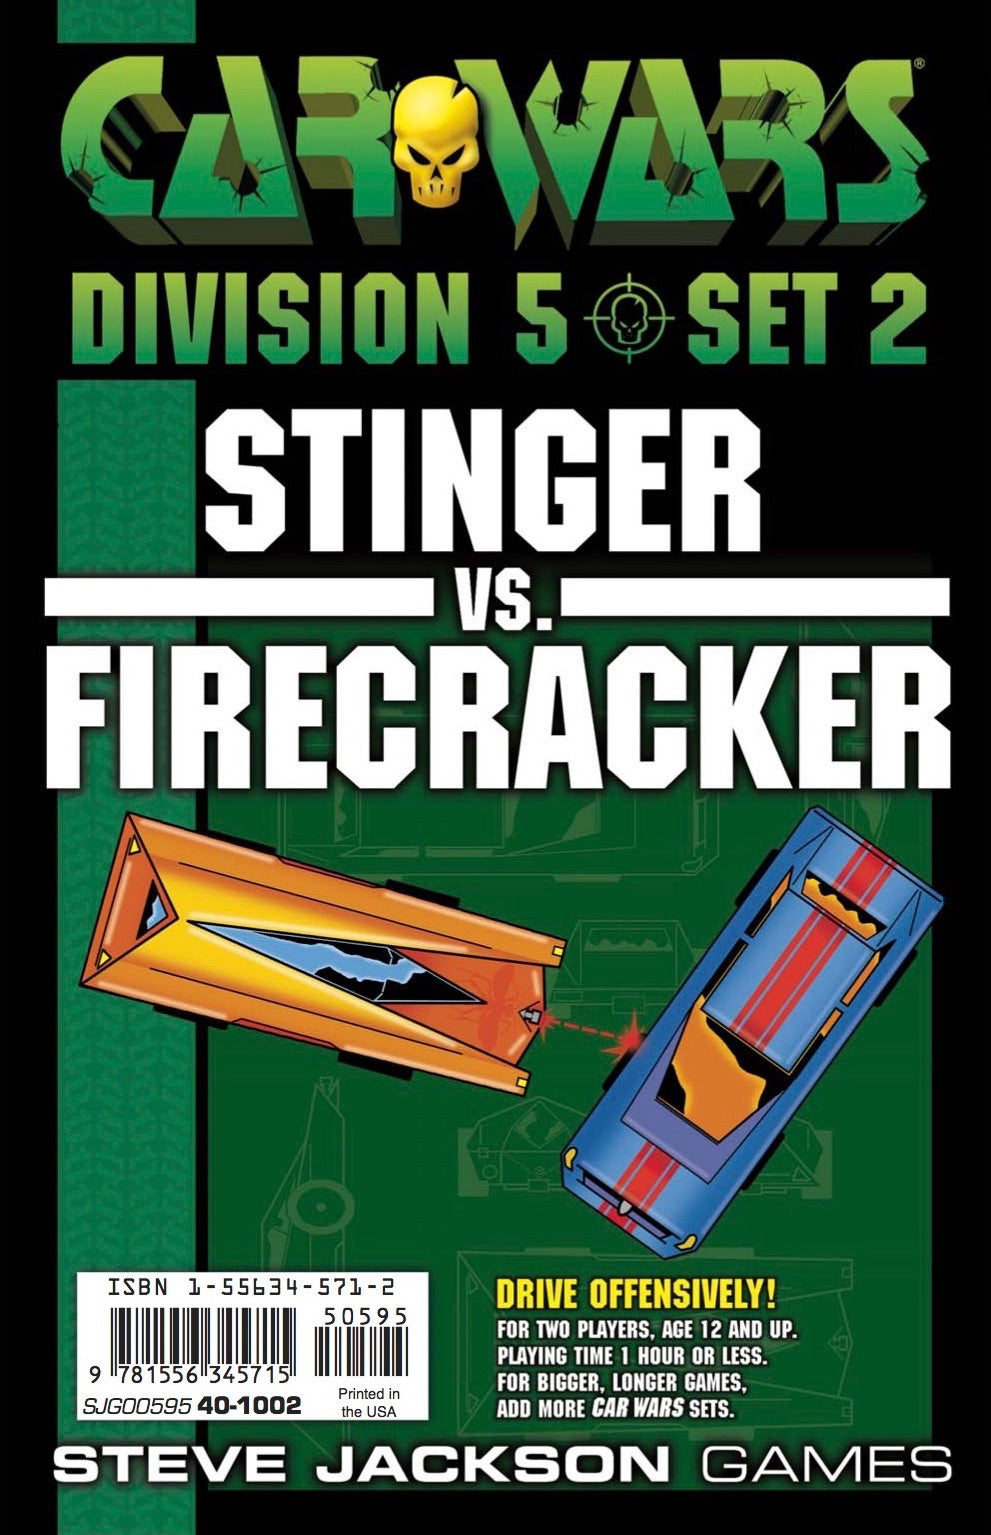 Car Wars Division 5 Set 2 - Stinger vs. Firecracker